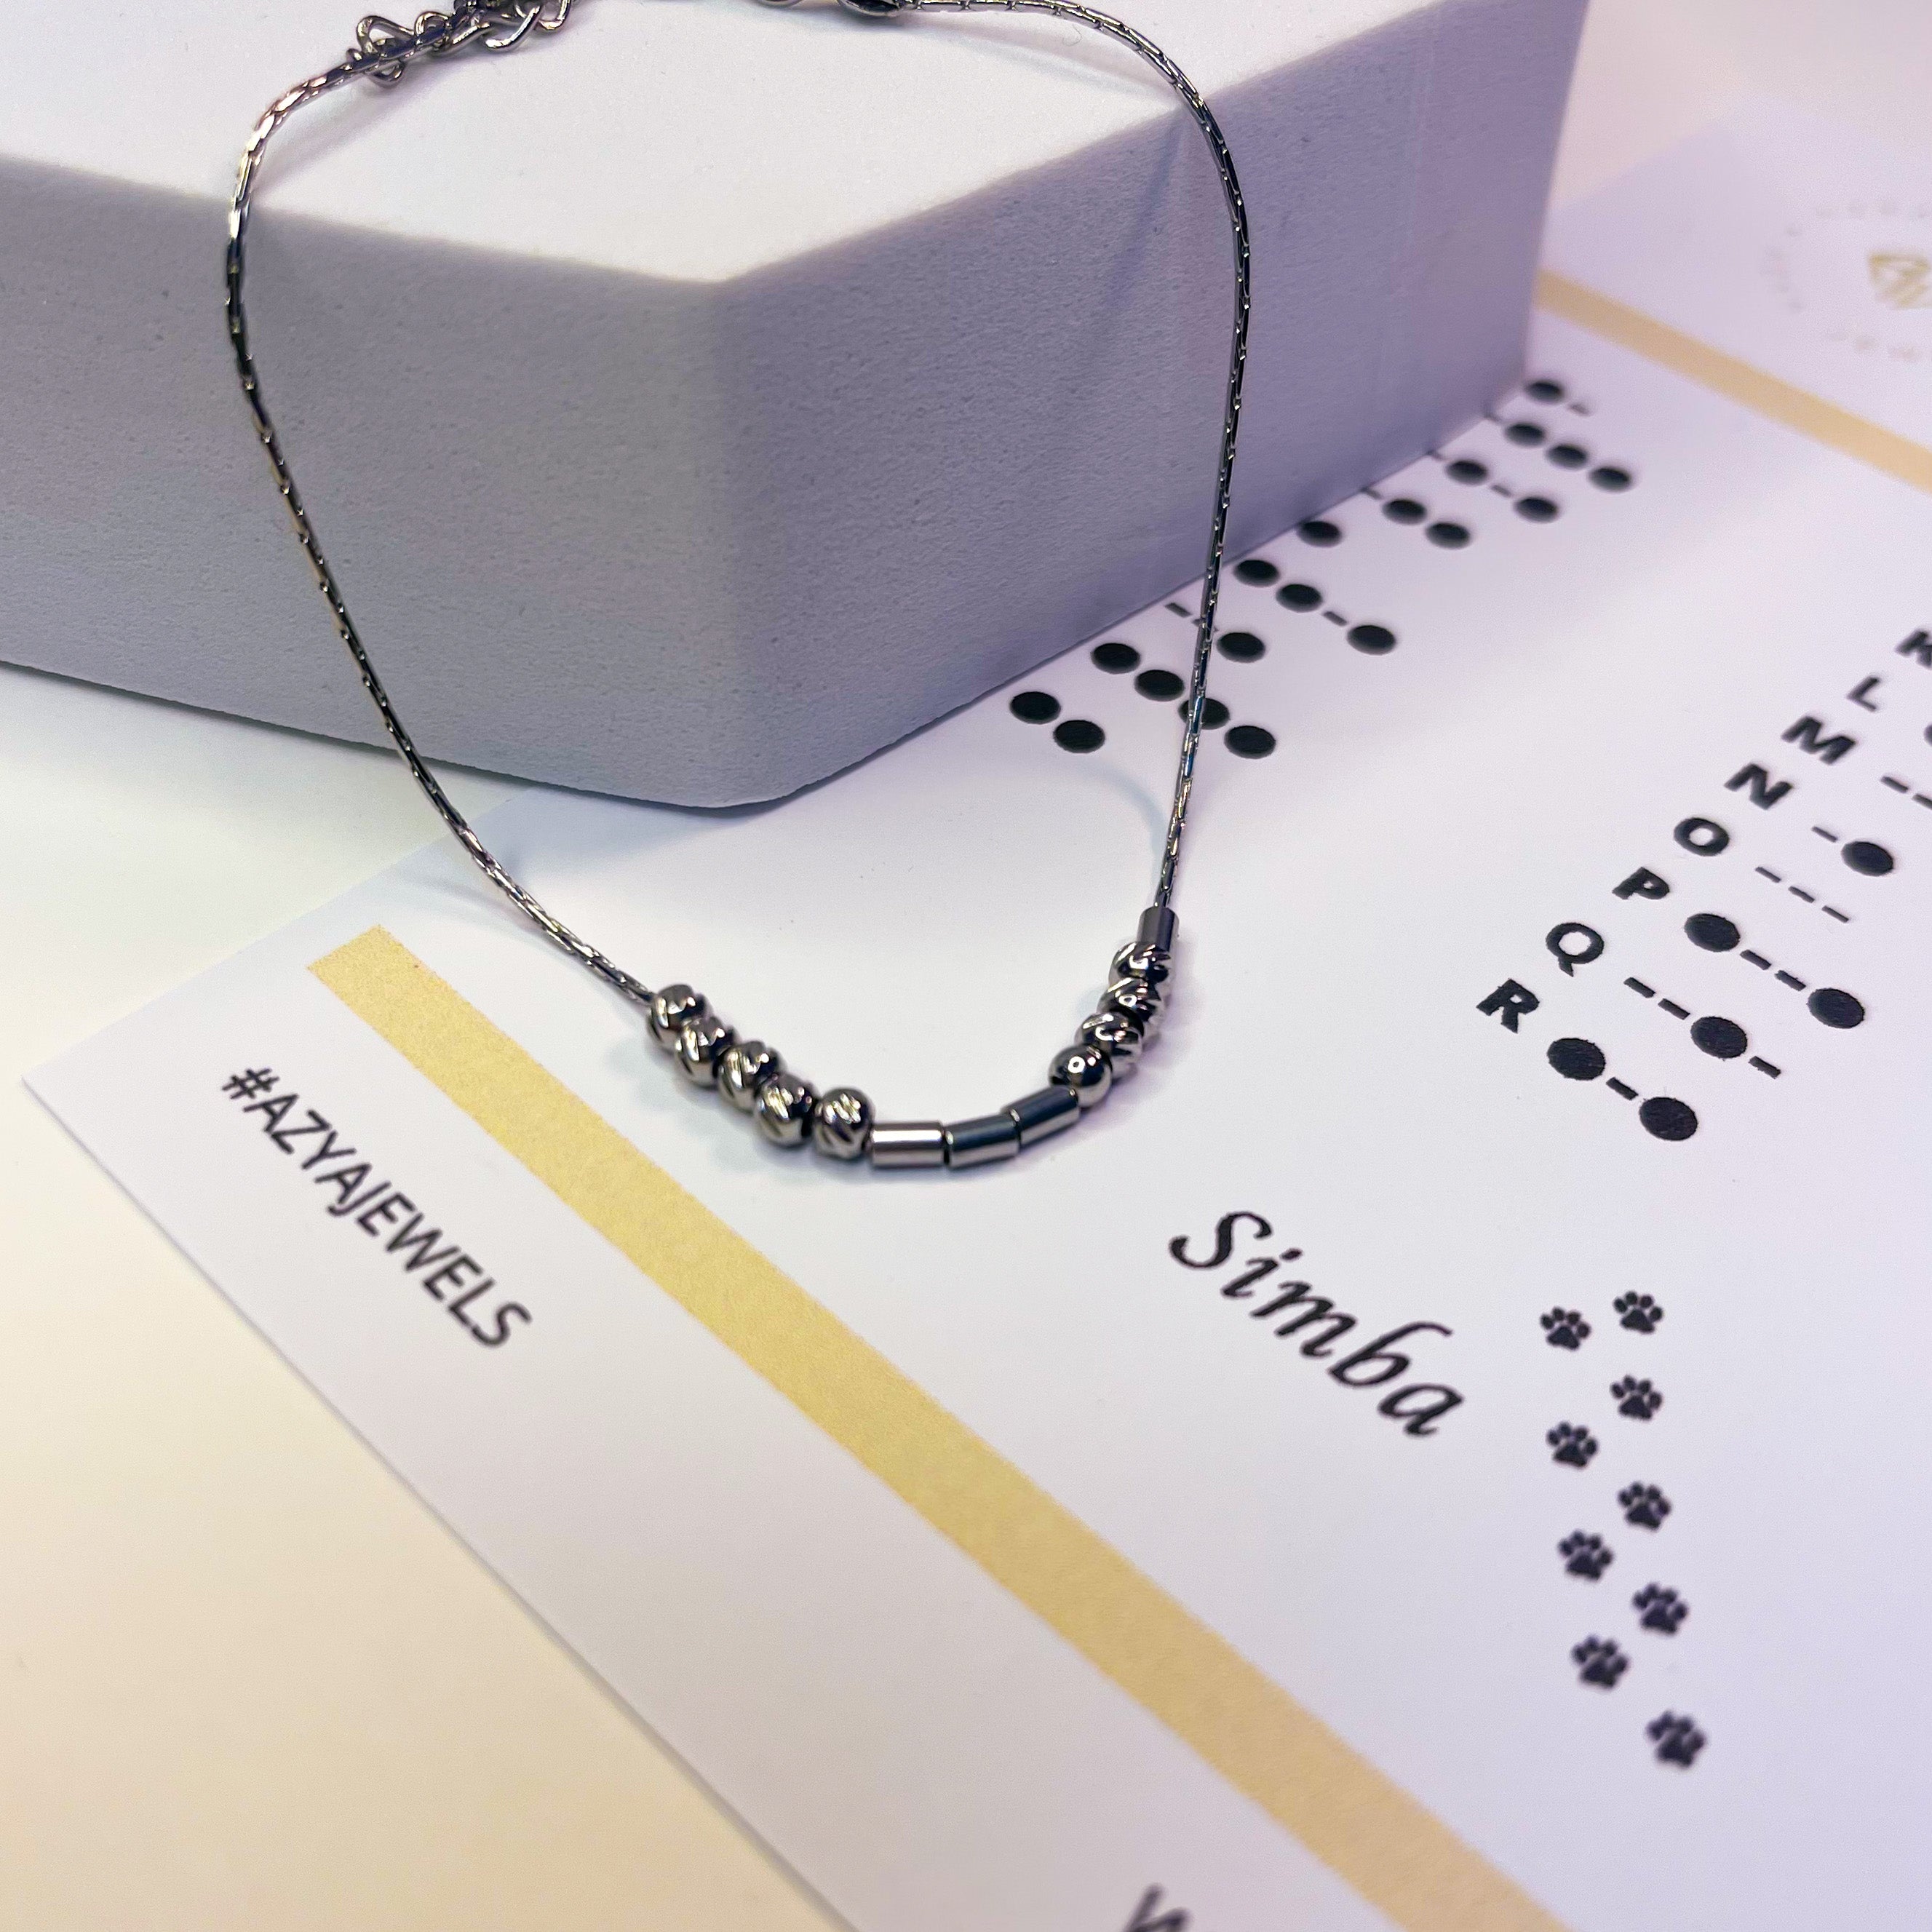 Morse code bracelet